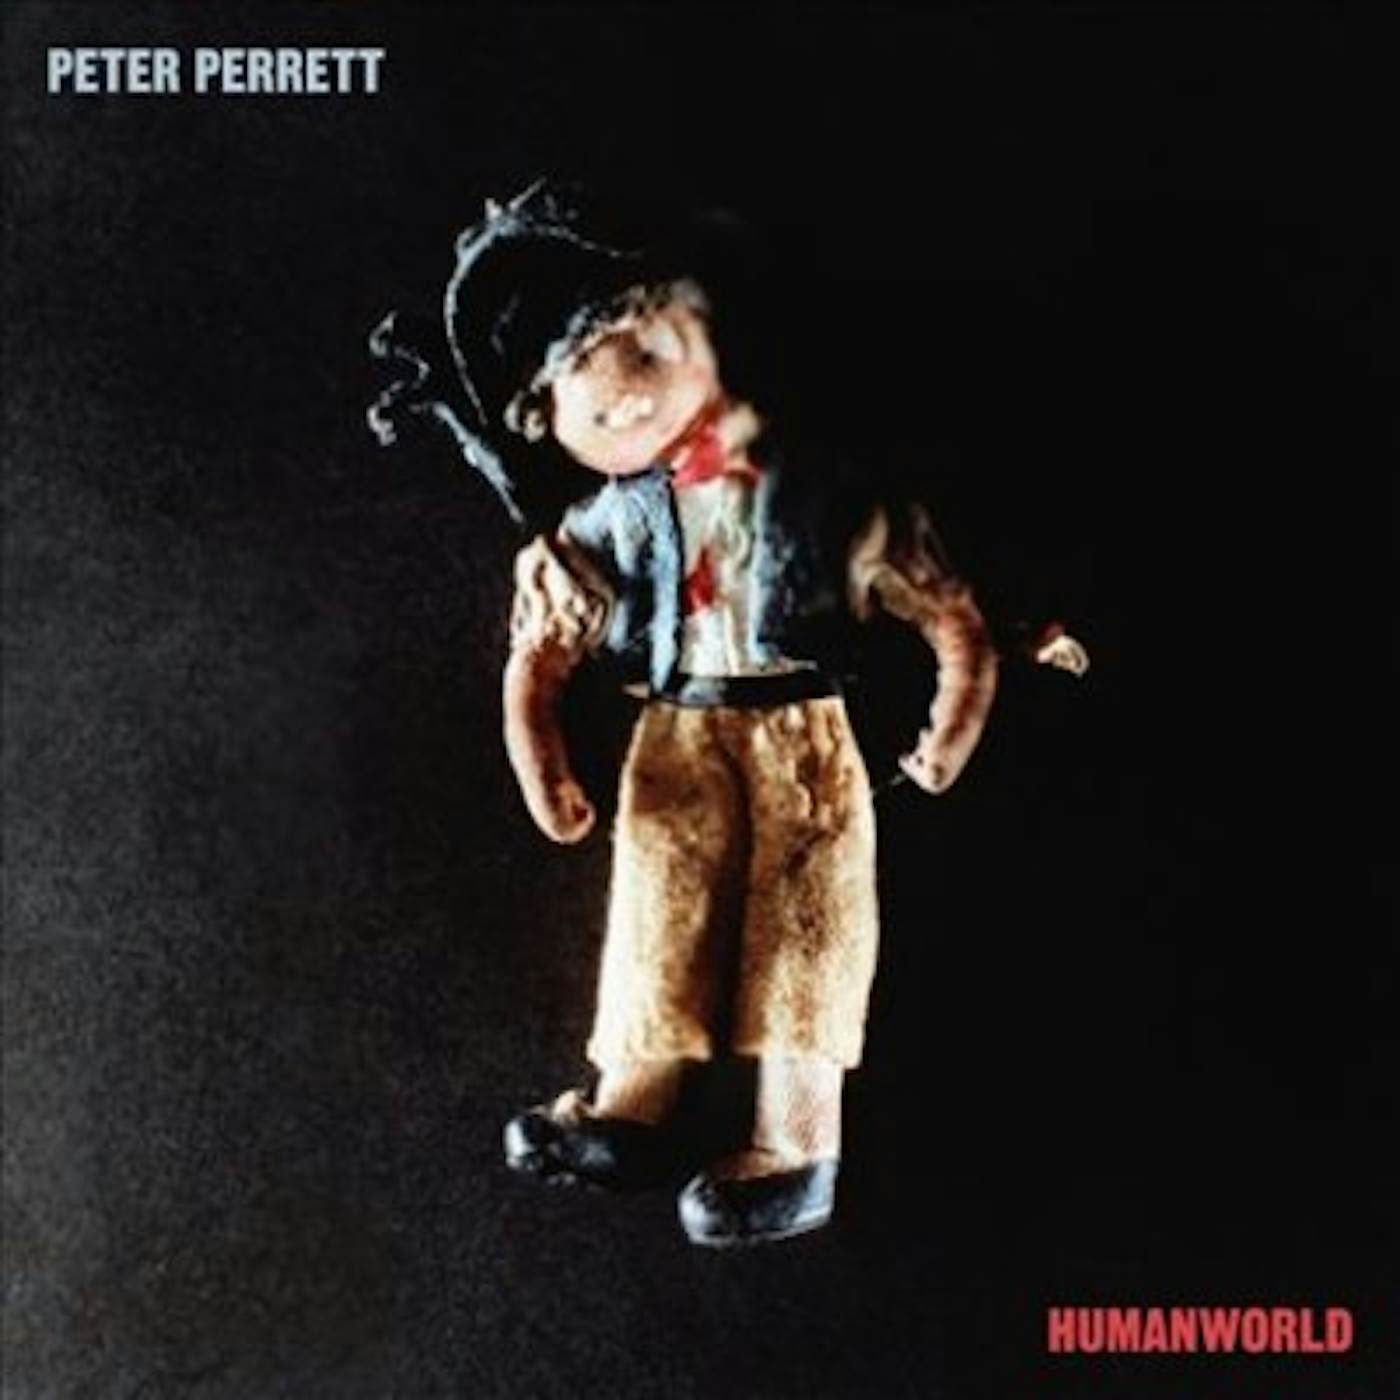 Peter Perrett Humanworld Vinyl Record